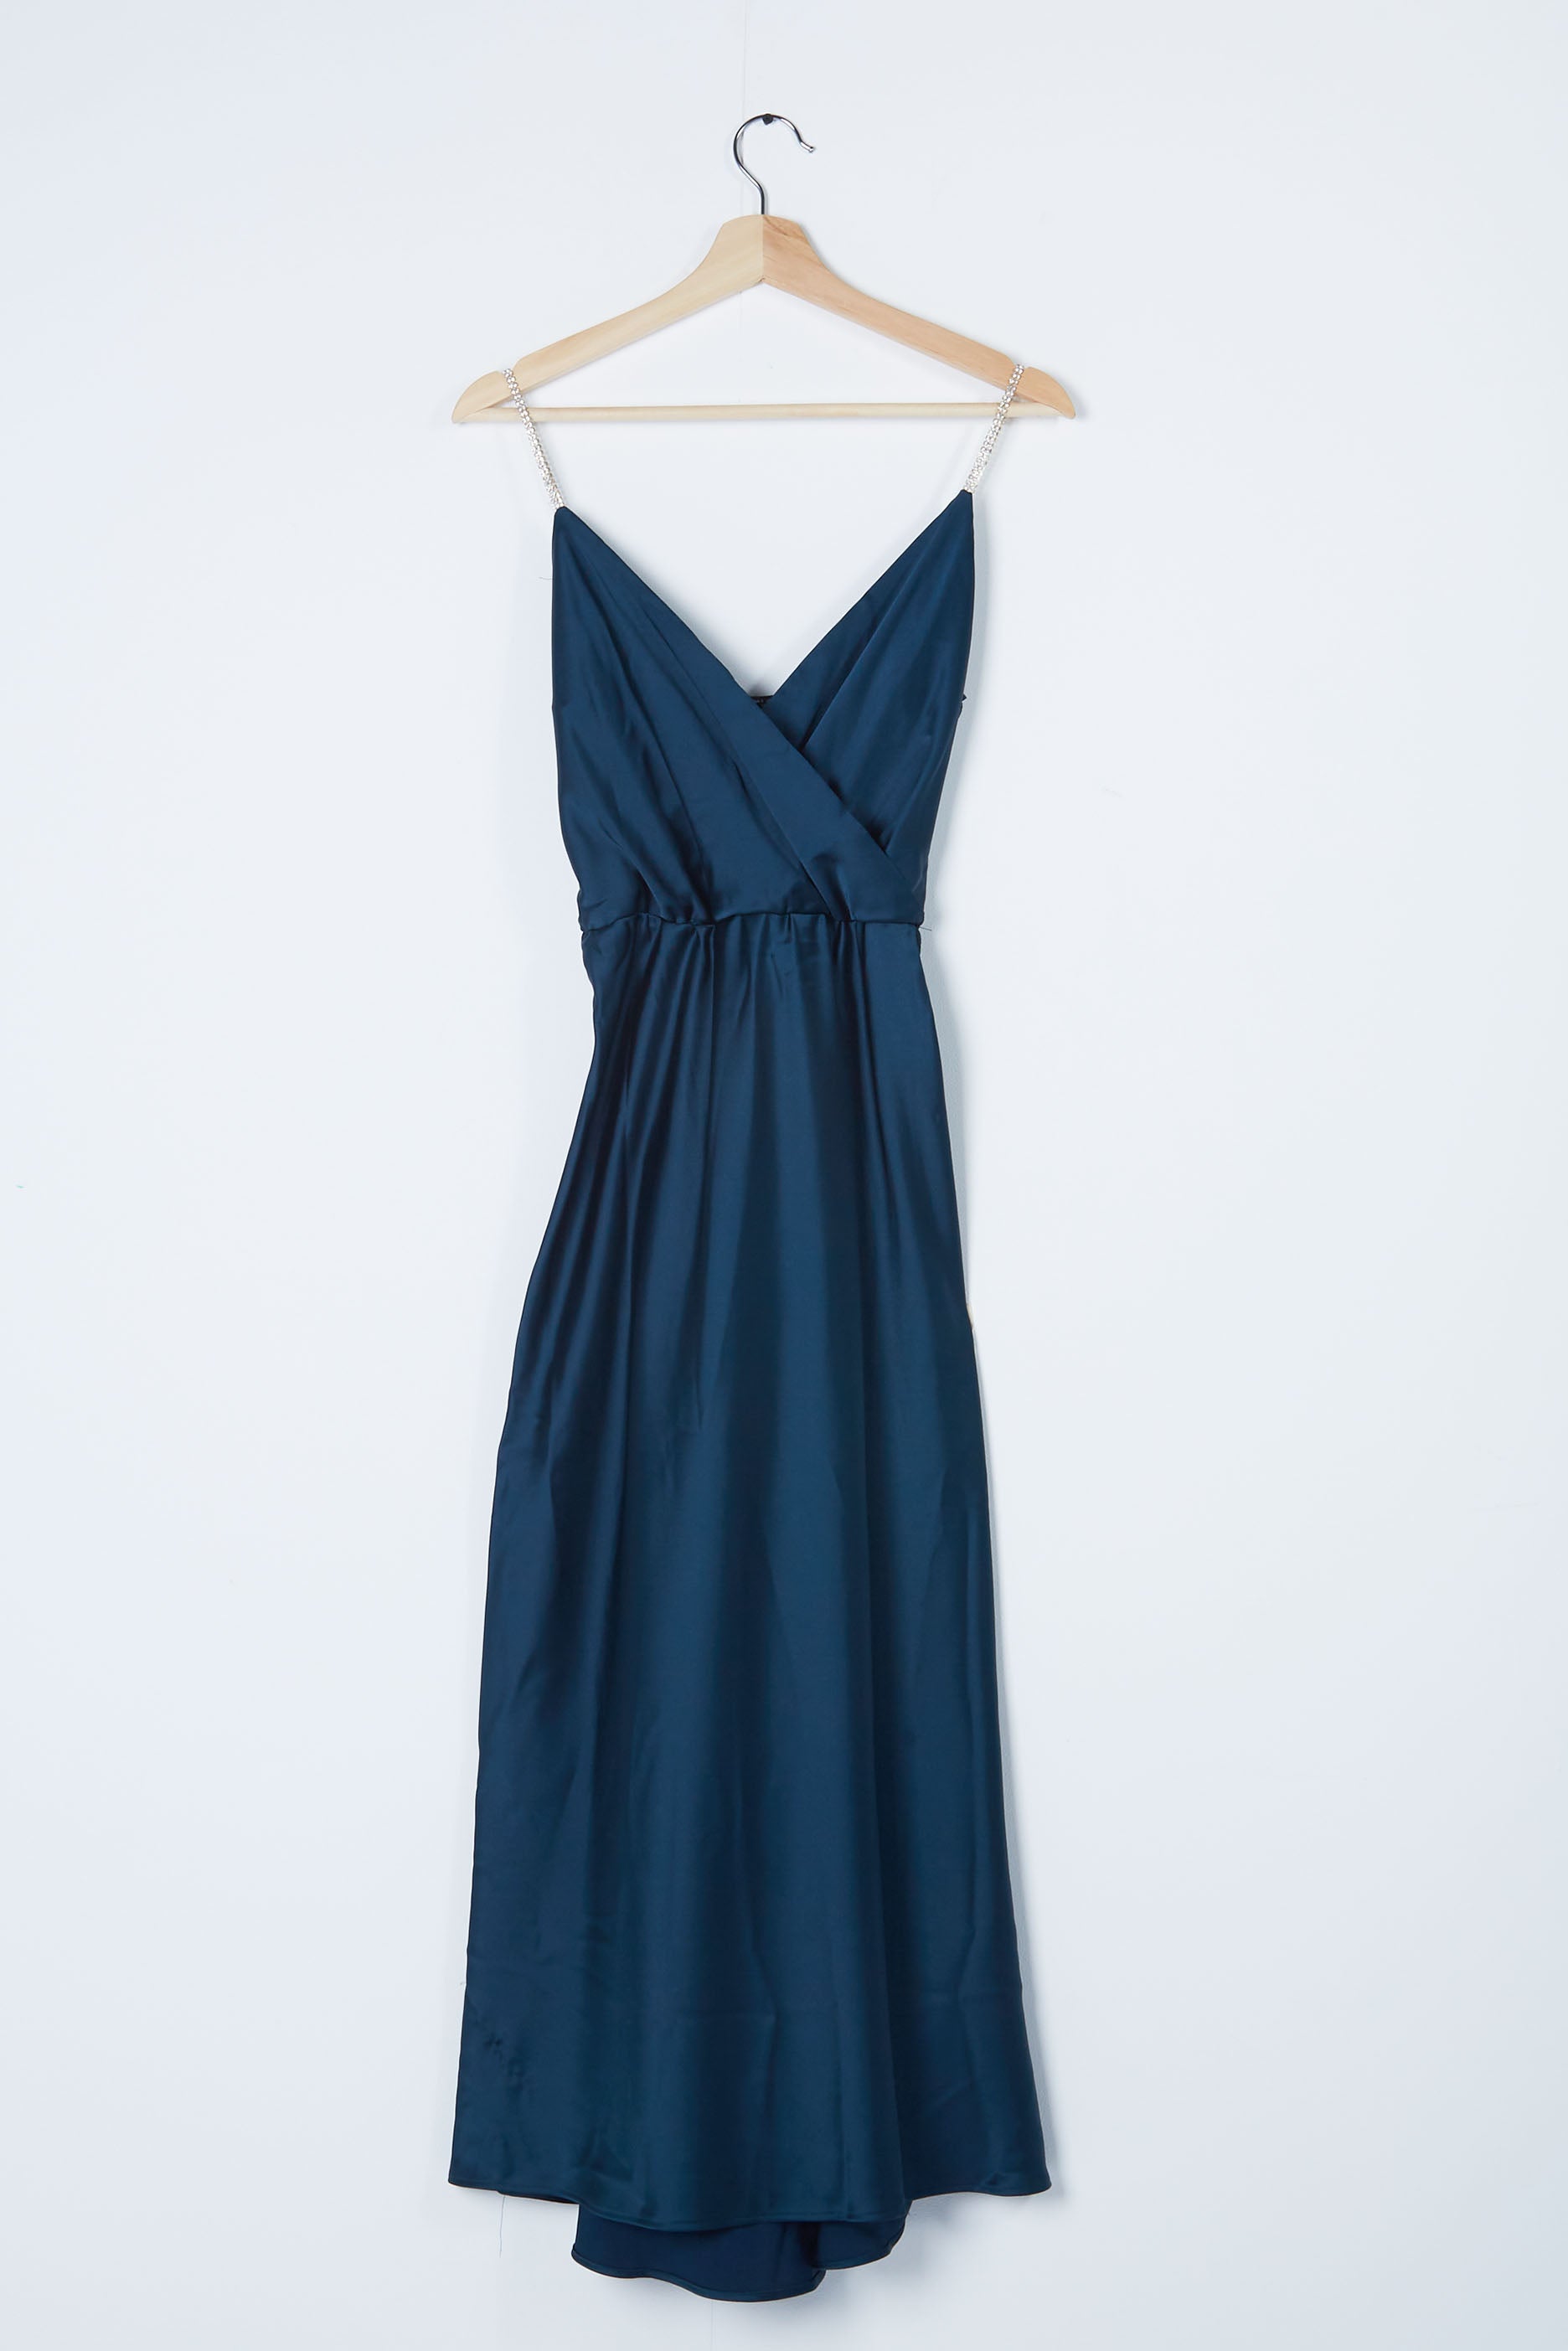 Teal Blue Satin Dress with Diamante Straps (Eu38)